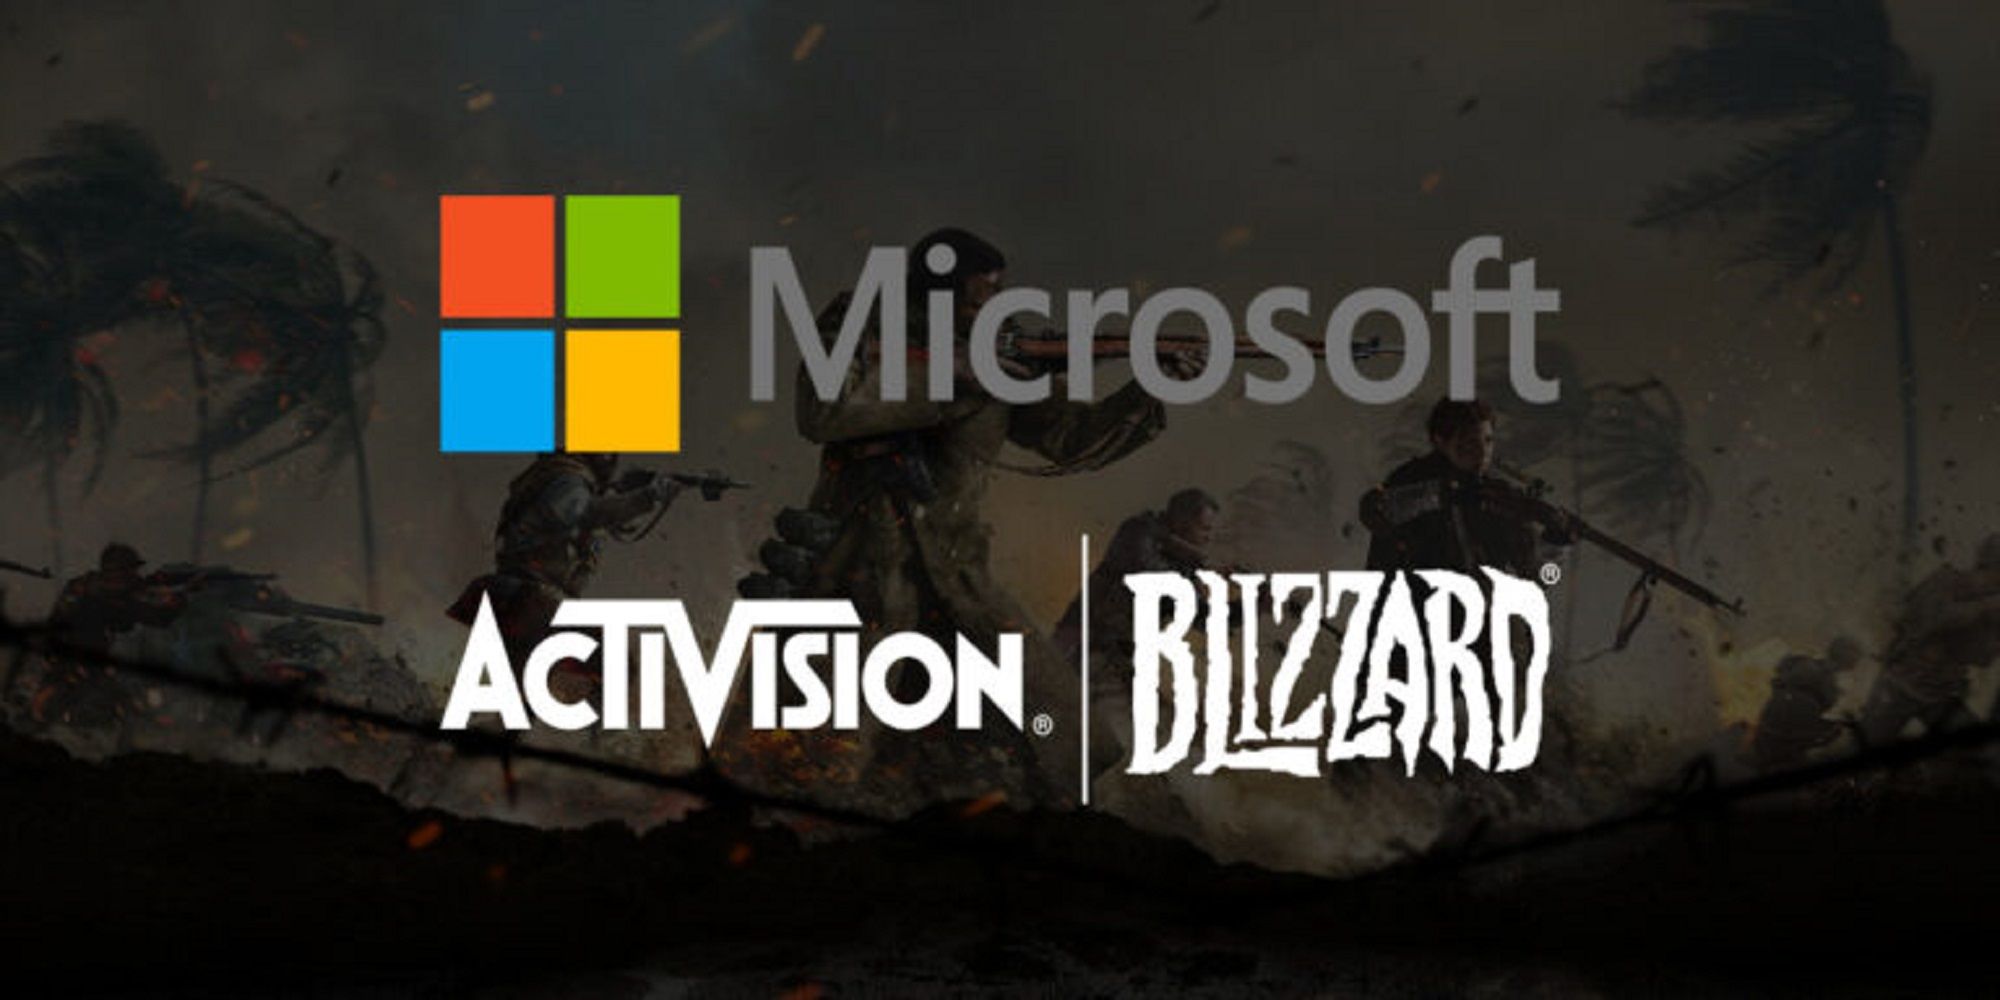 Microsoft Activision Blizzard logo